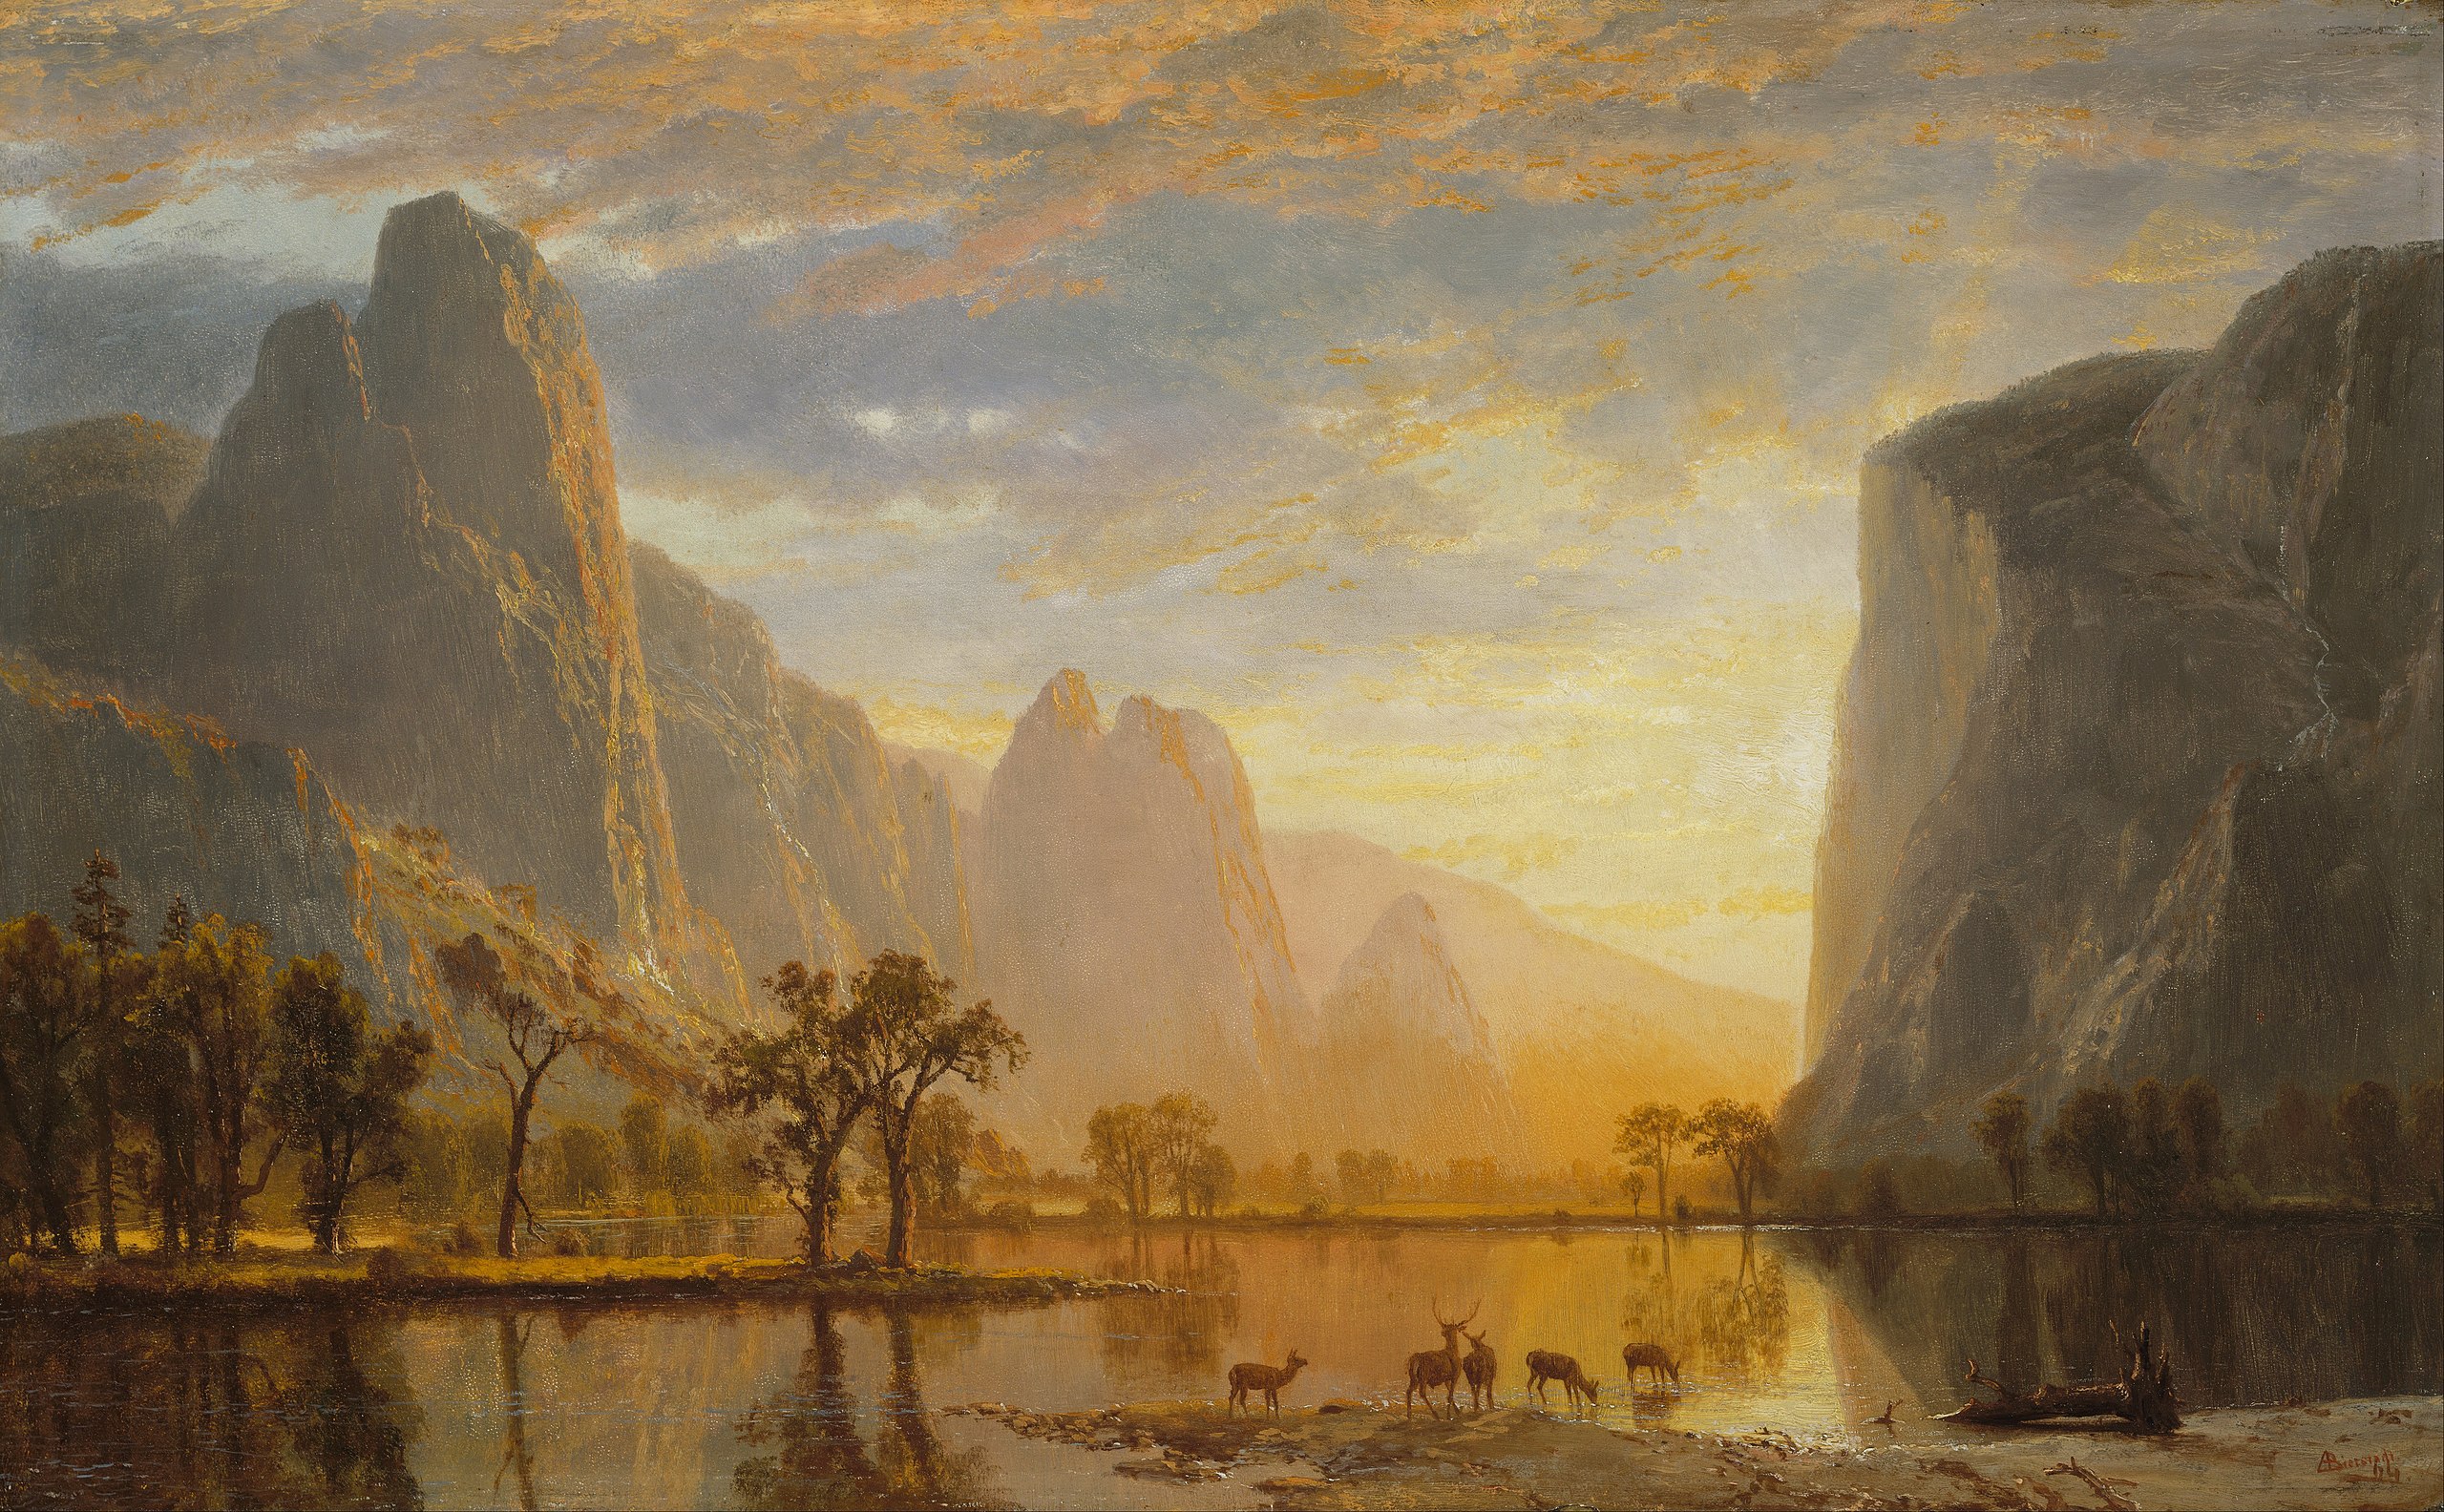 Yosemite Valley by Albert Bierstadt - 1864 - 30,16 x 48,89 cm Museum of Fine Arts Boston